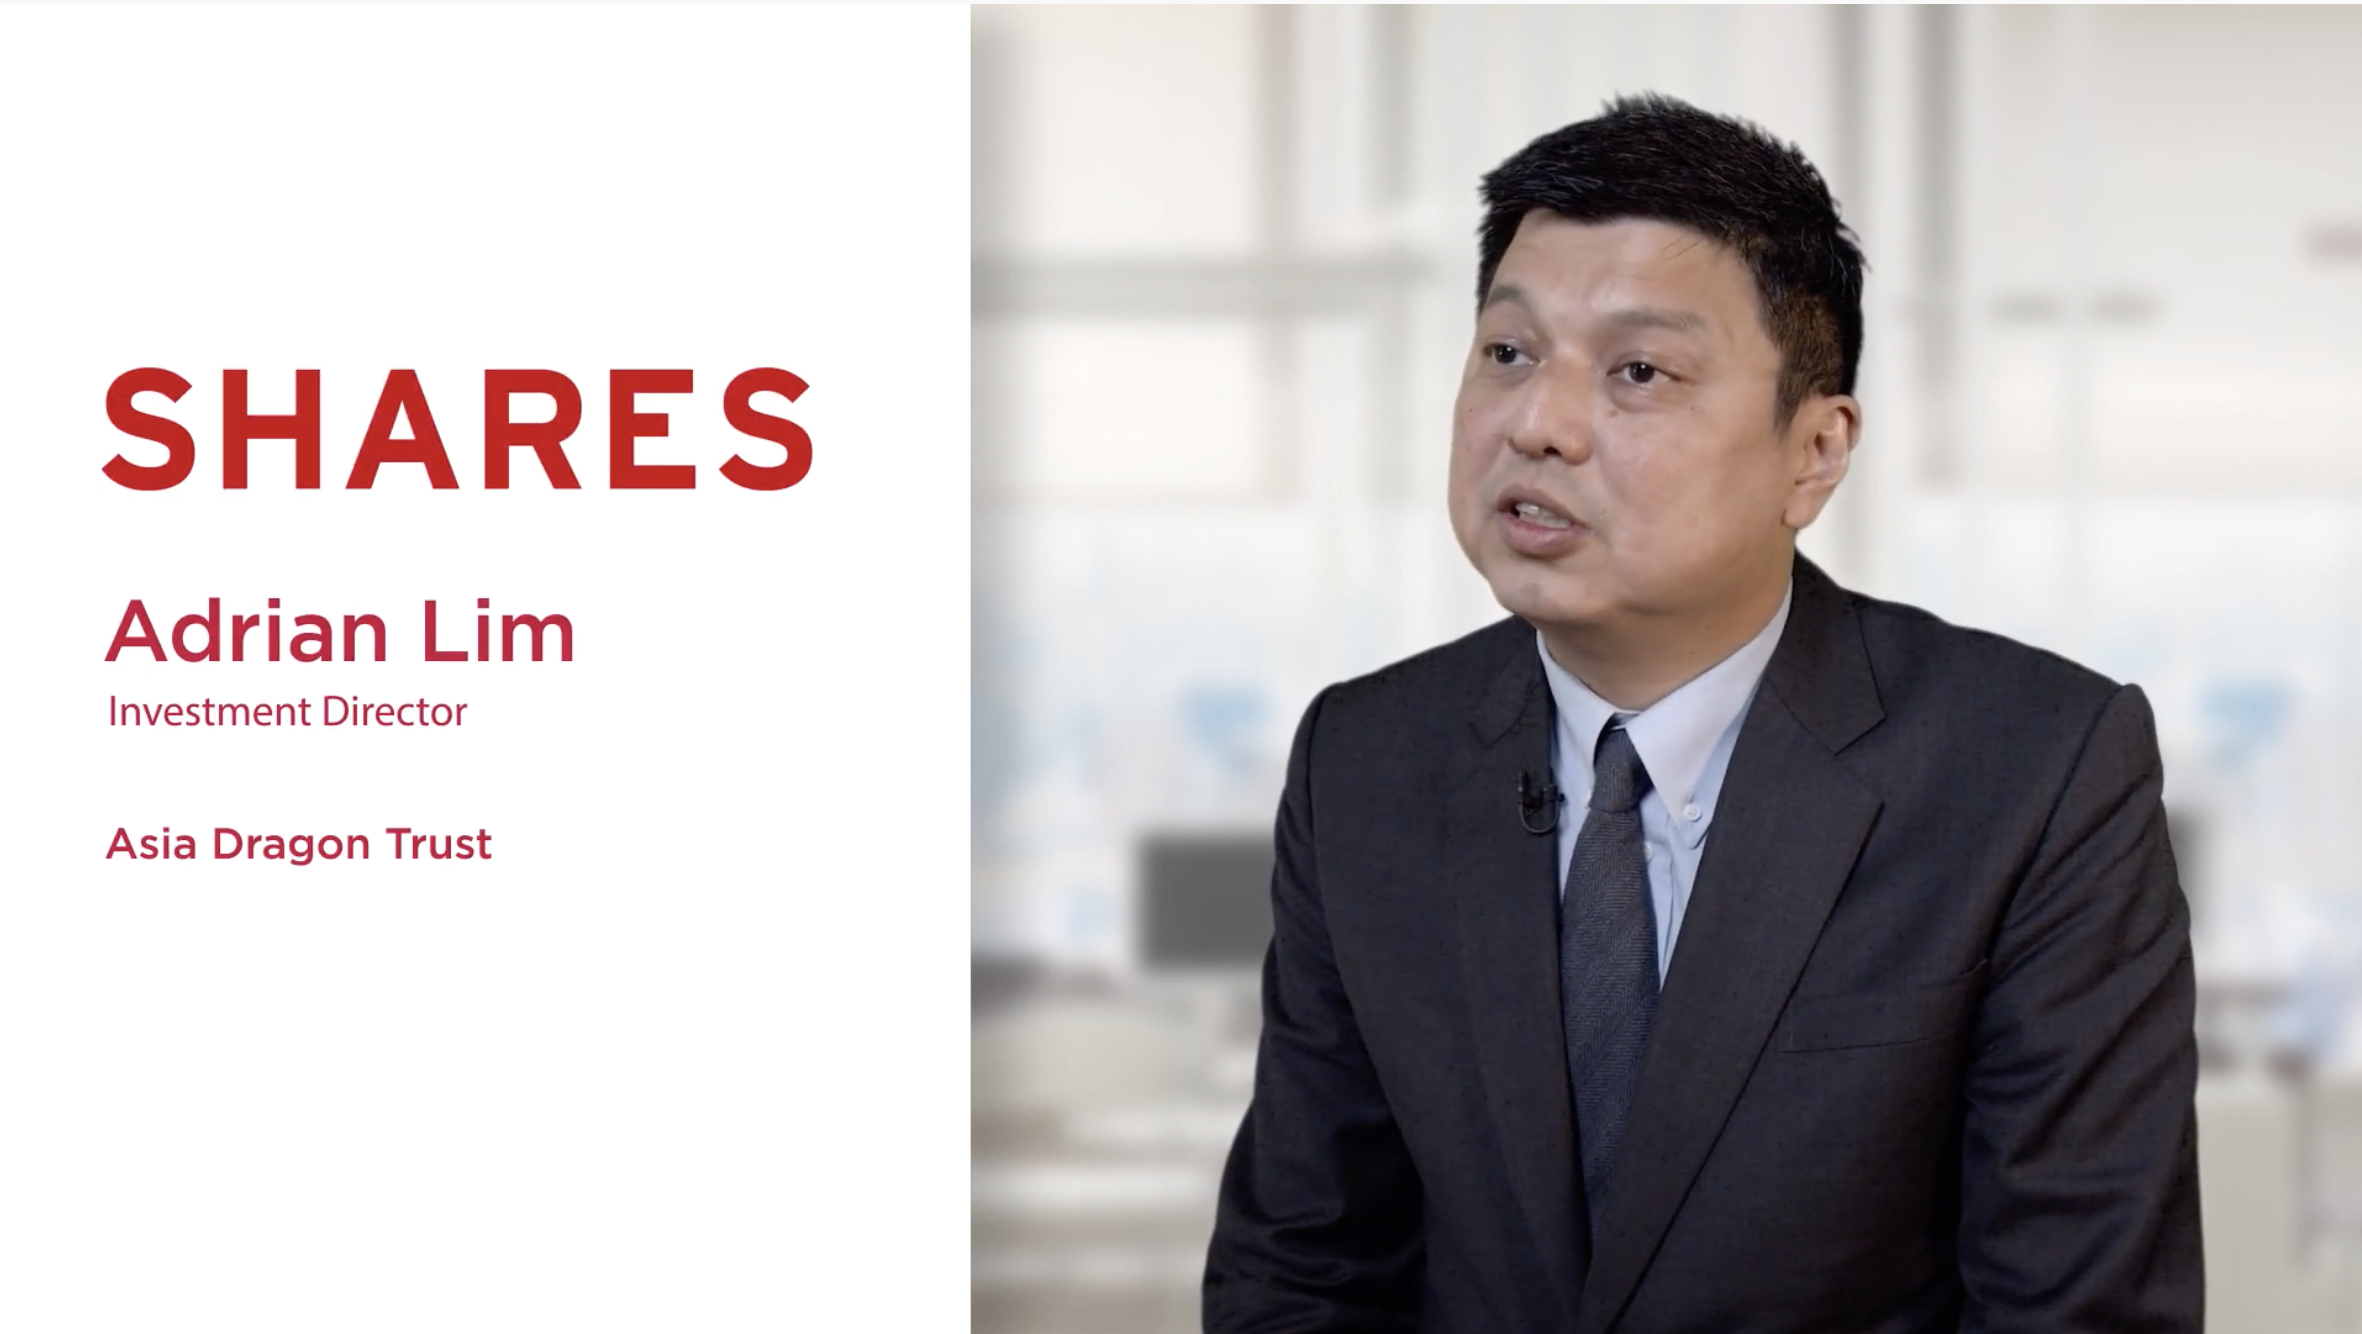 Asia Dragon Trust - Adrian Lim, Investment Director